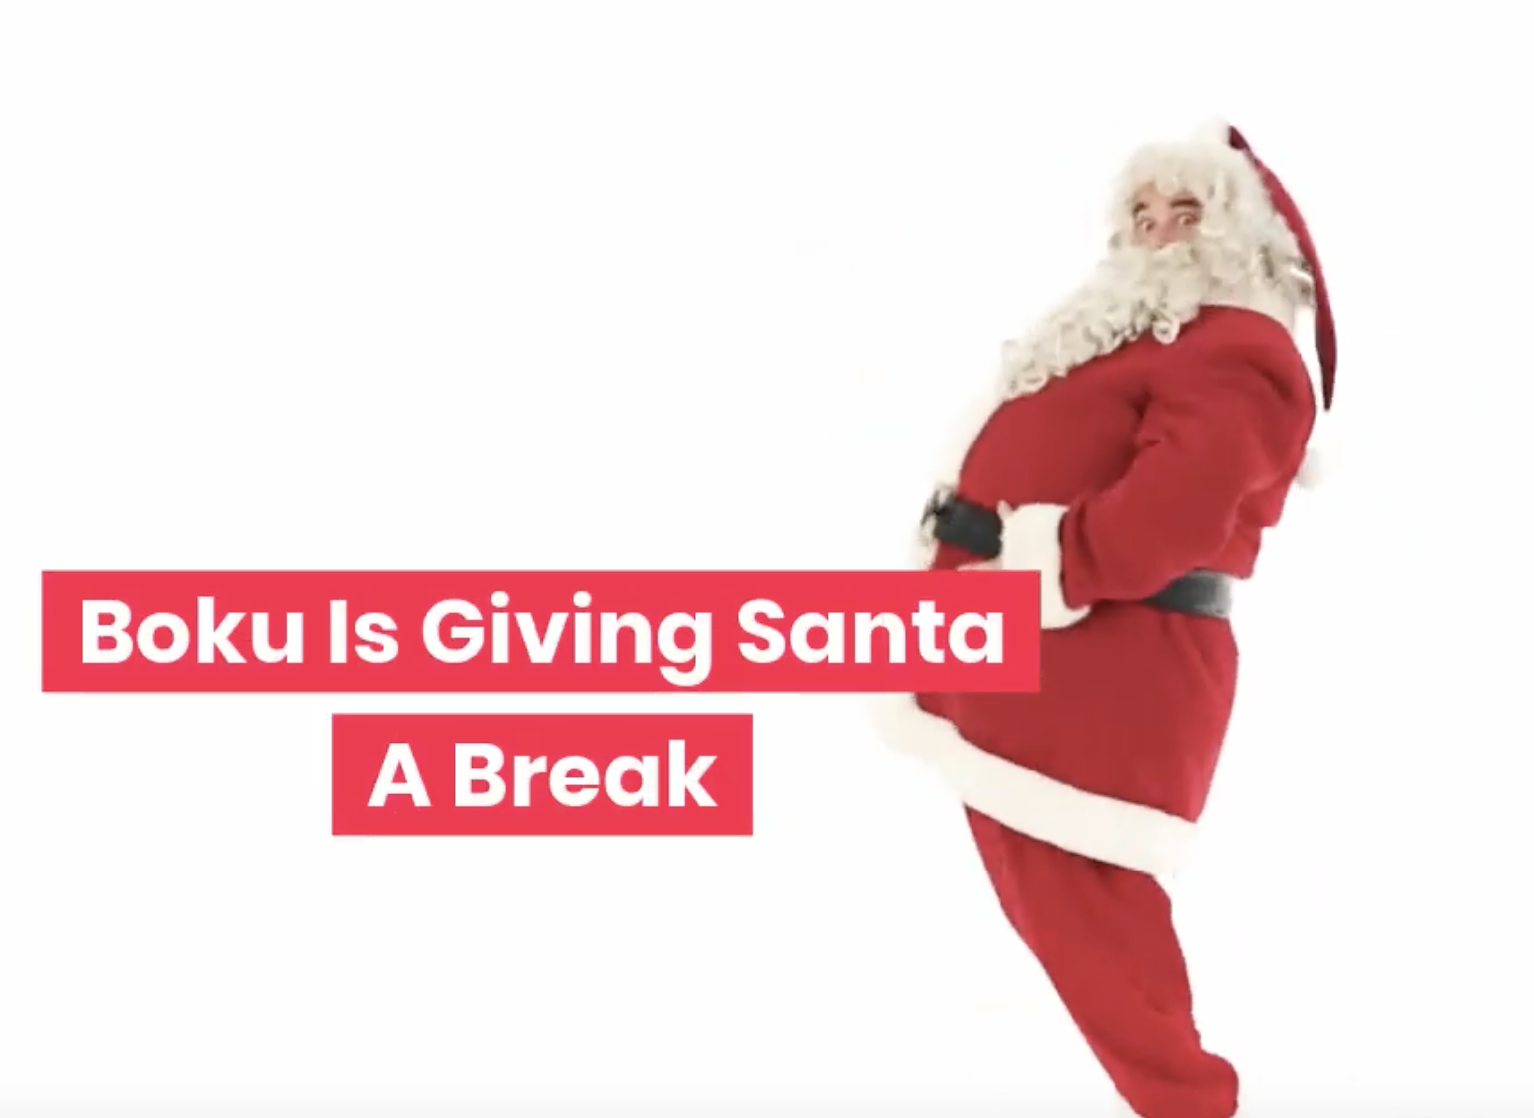 This December...Boku is giving Santa a BREAK!